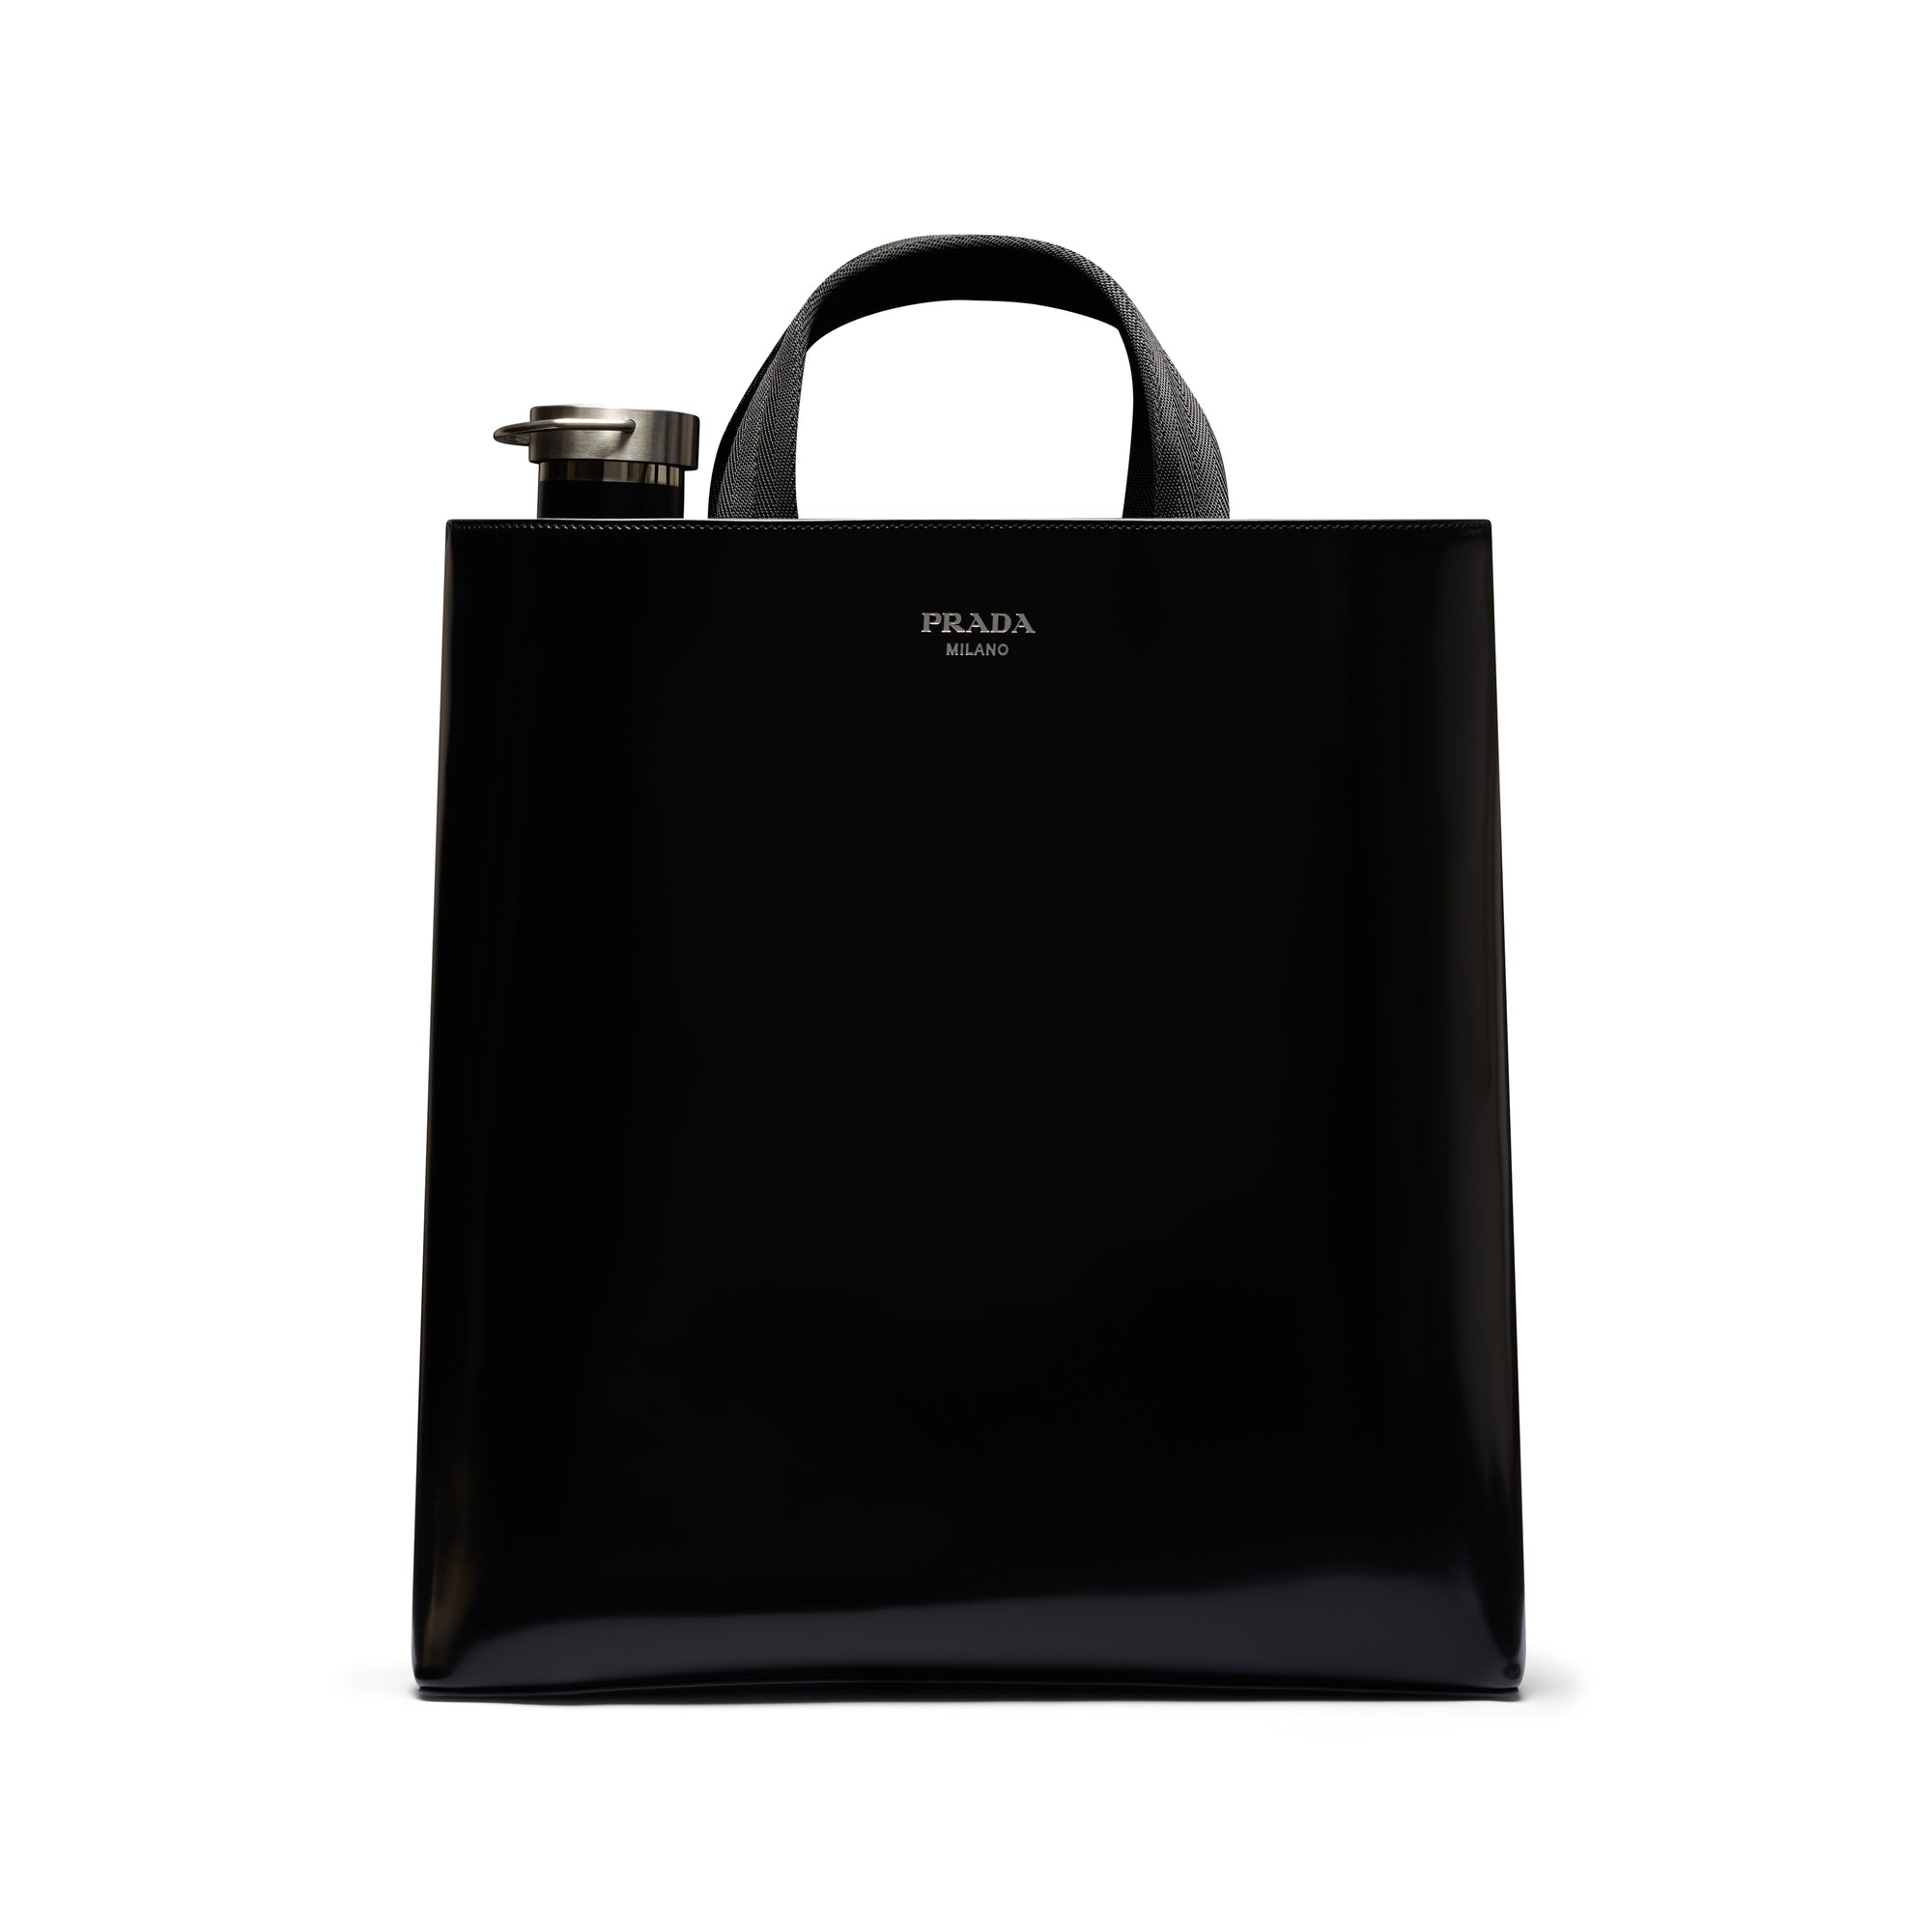 Prada - Men’s Shopping Bag with Bottle - (Black) view 1